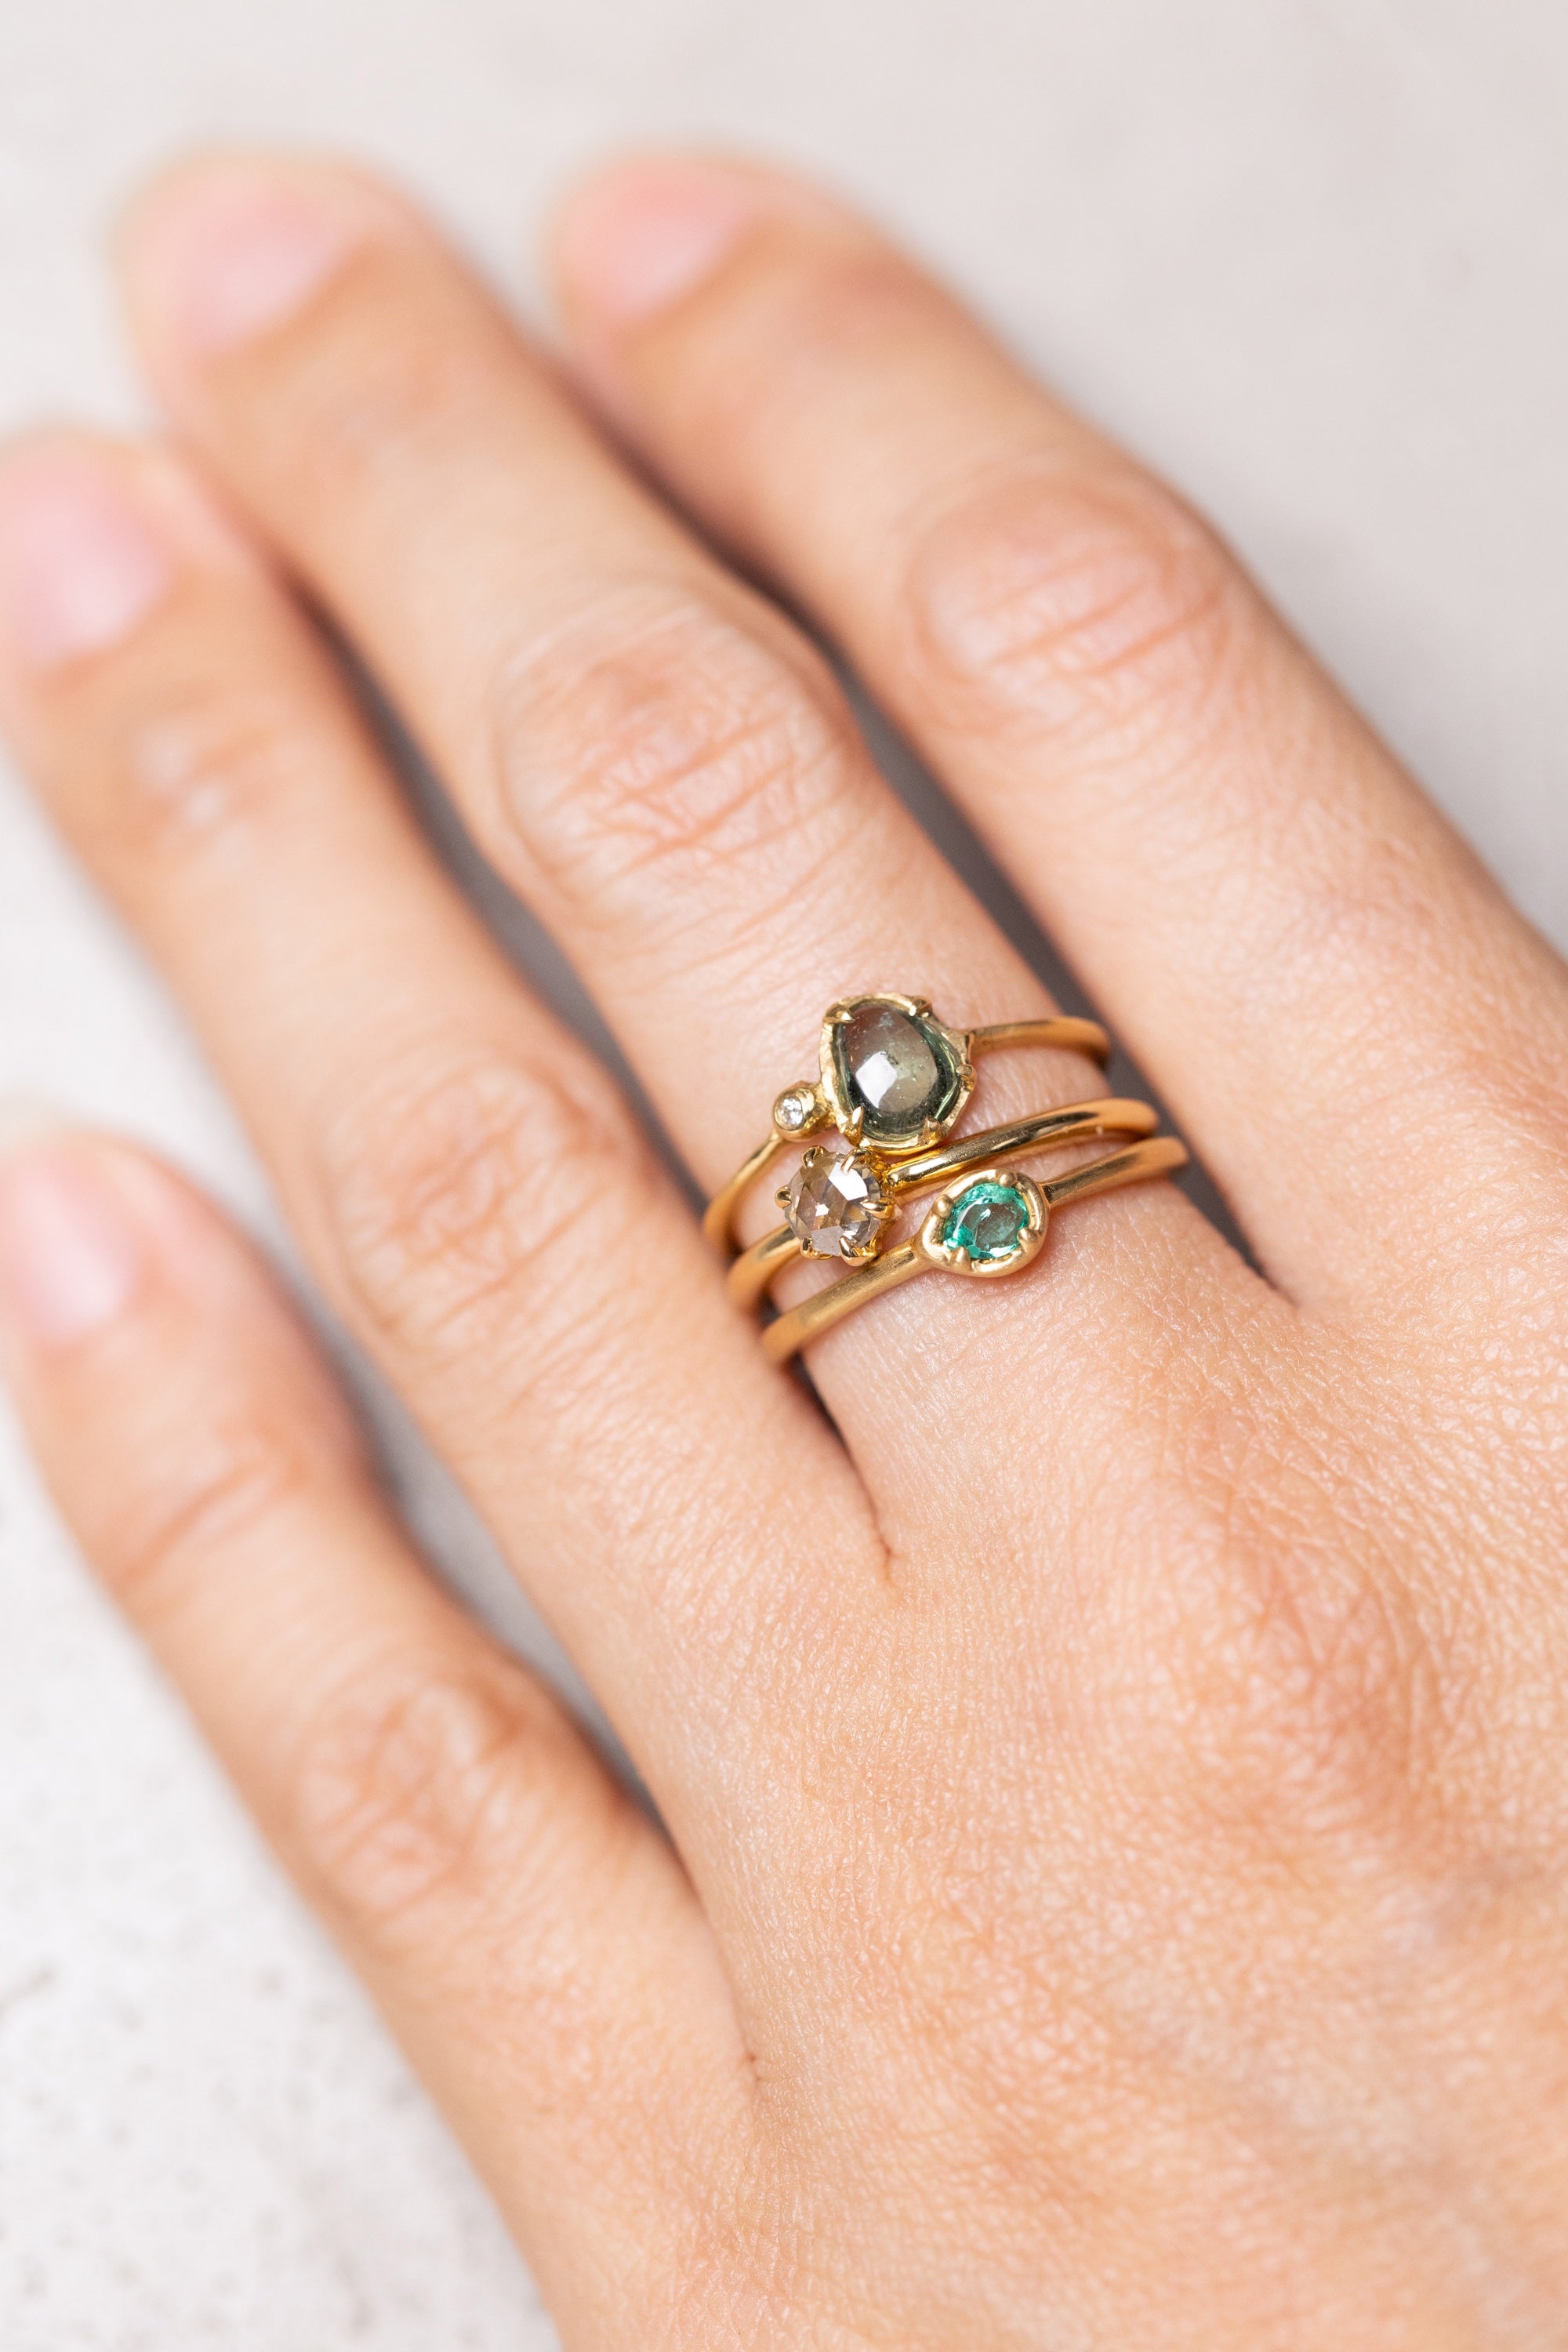 Small Pear Shape Emerald Ring (18k)